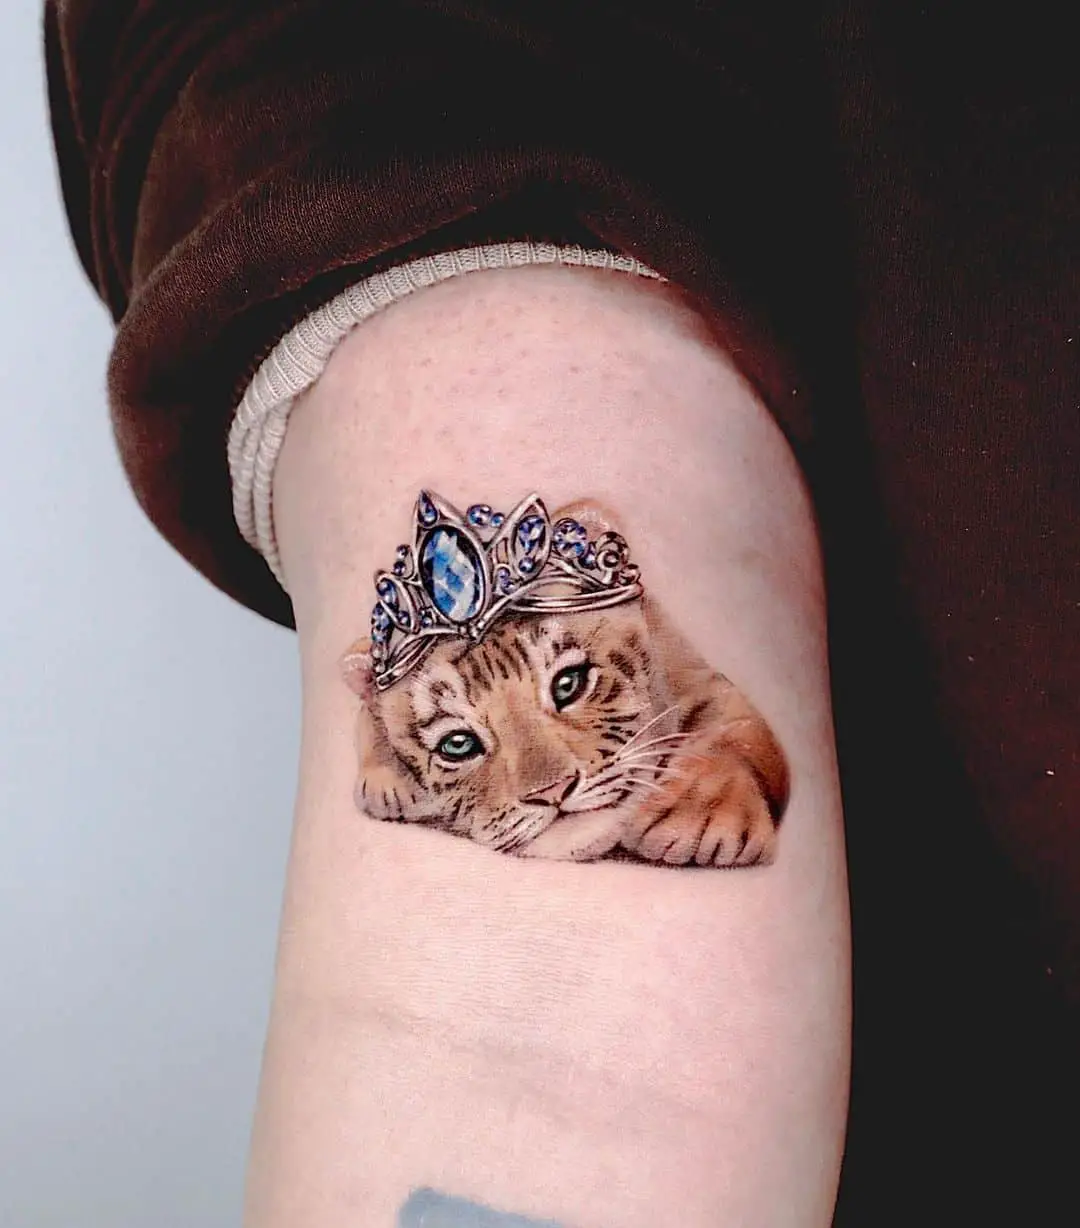 Tiger with crown tattoo by tattooist siia